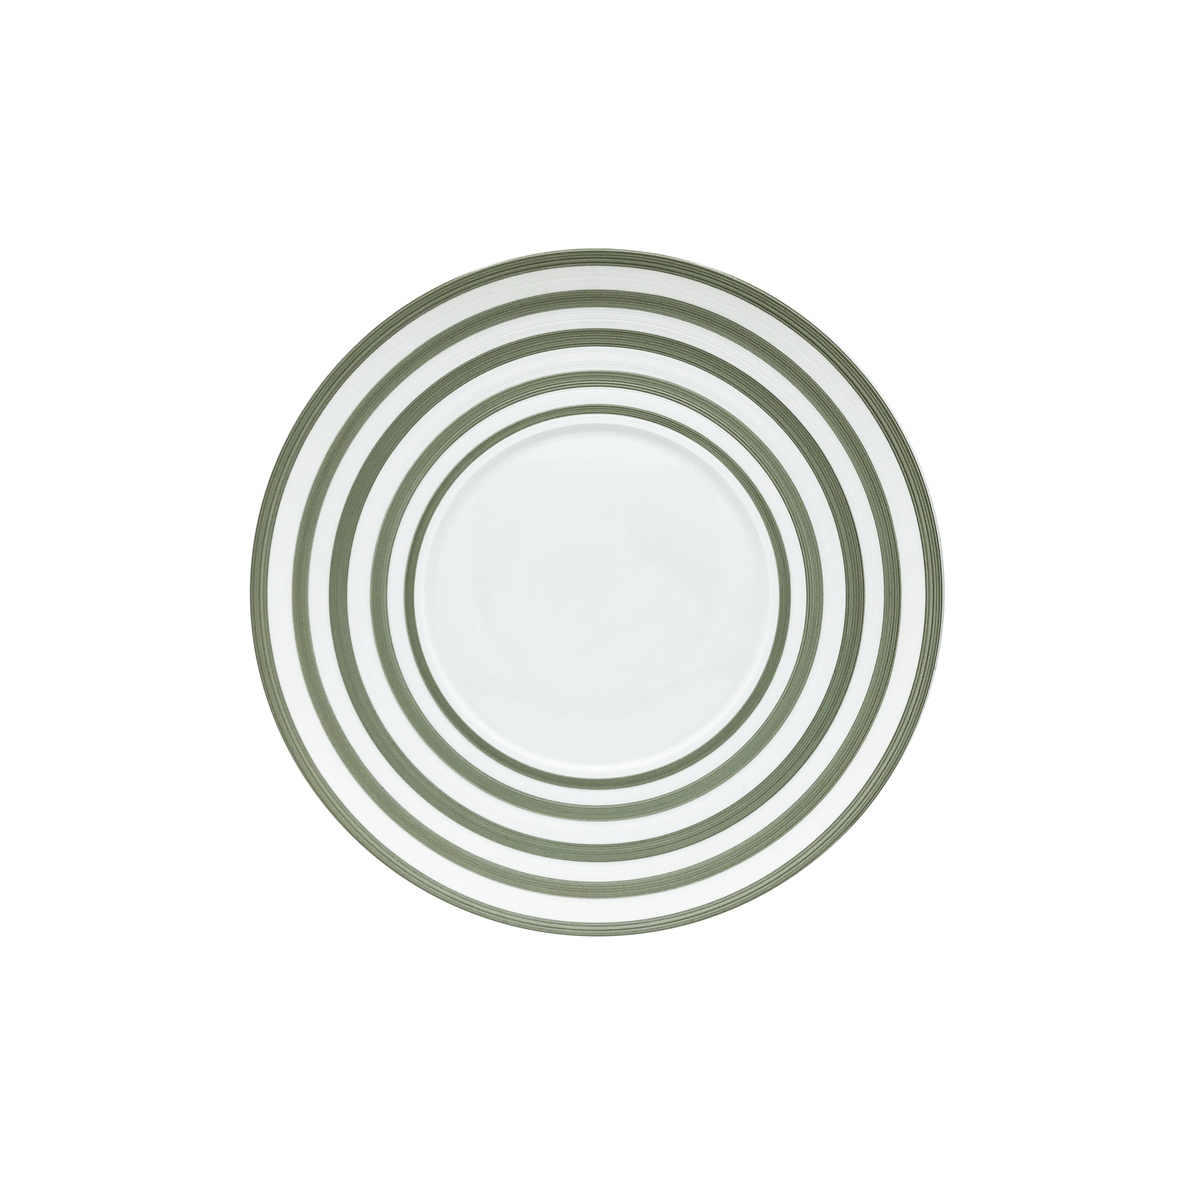 HEMISPHERE Khaki green striped - Dinner plate